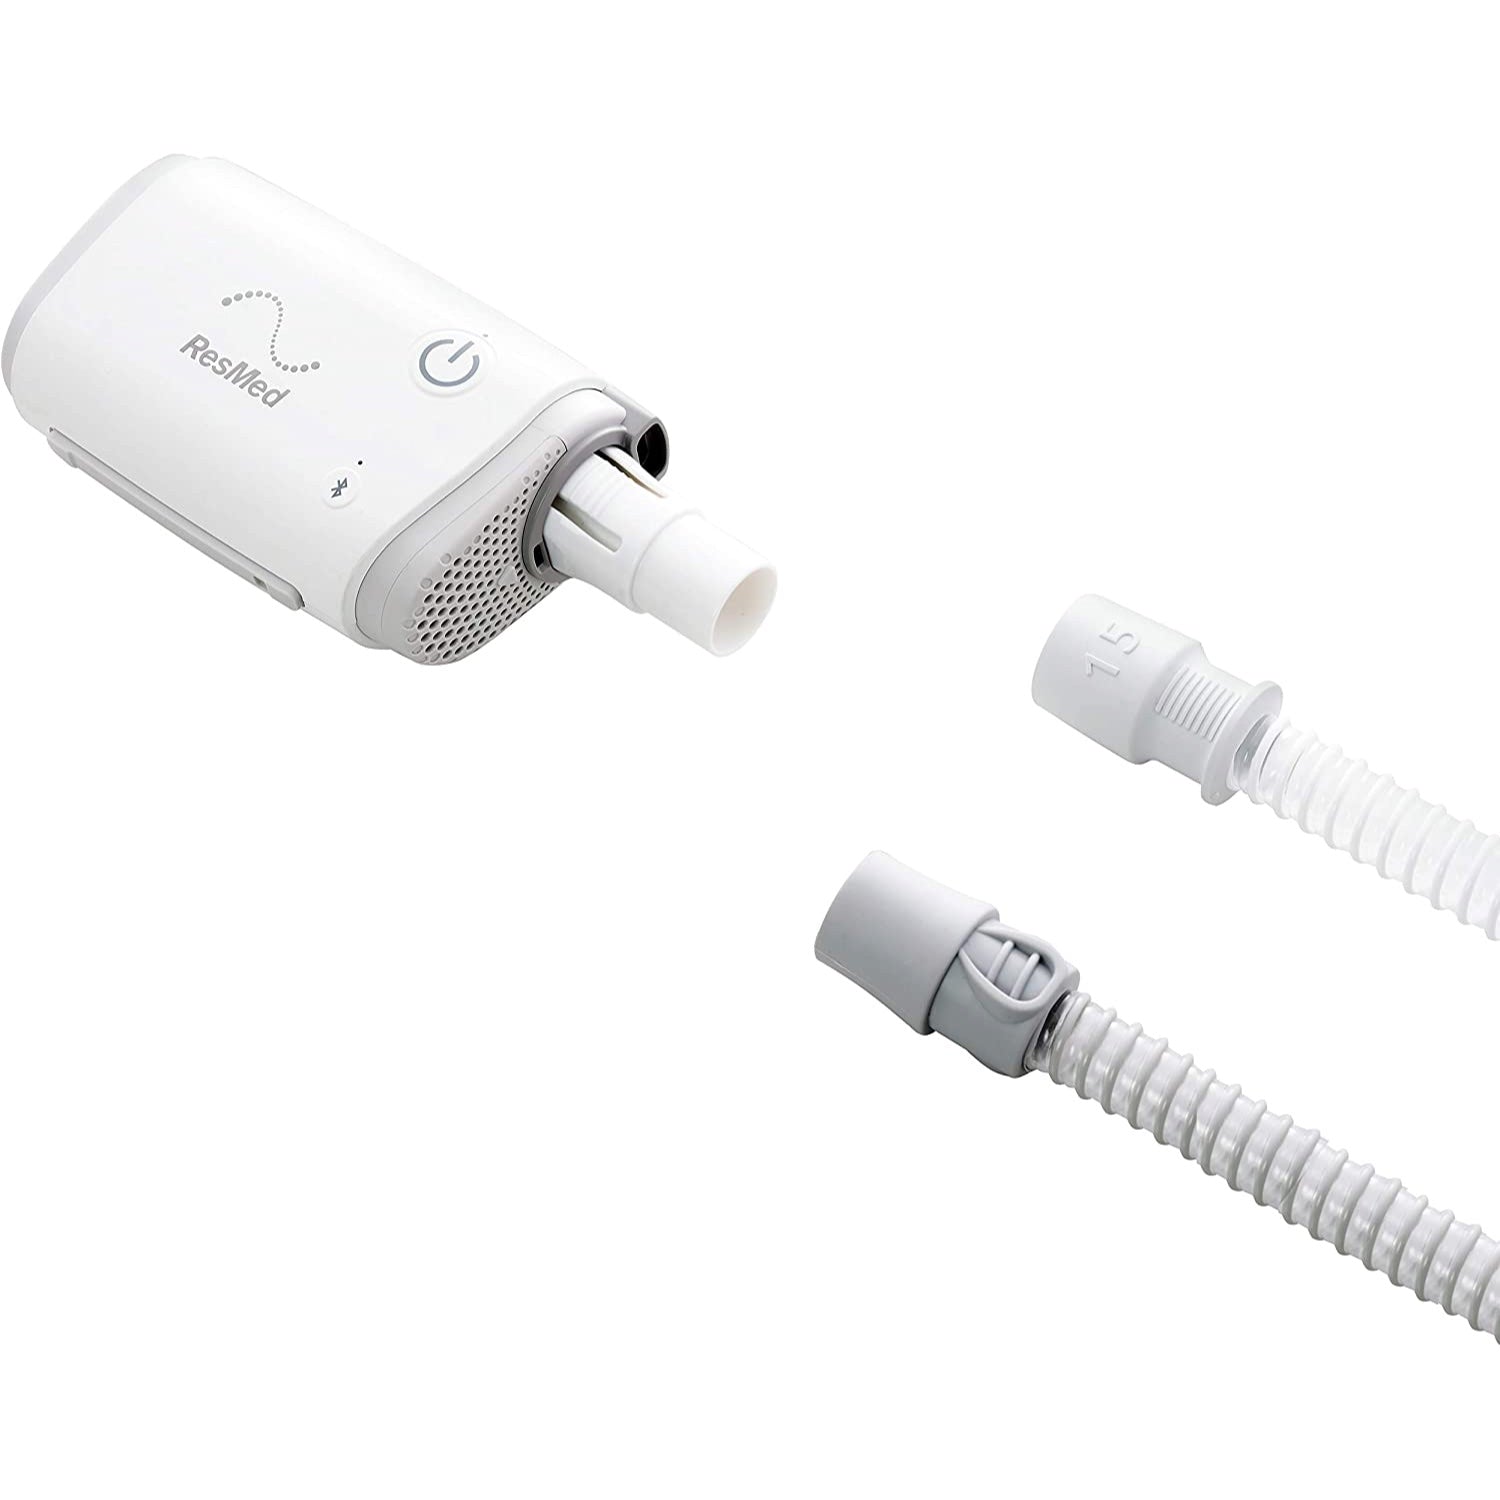 AirMini Connector - choosing 15 mm or 22 mm tubing